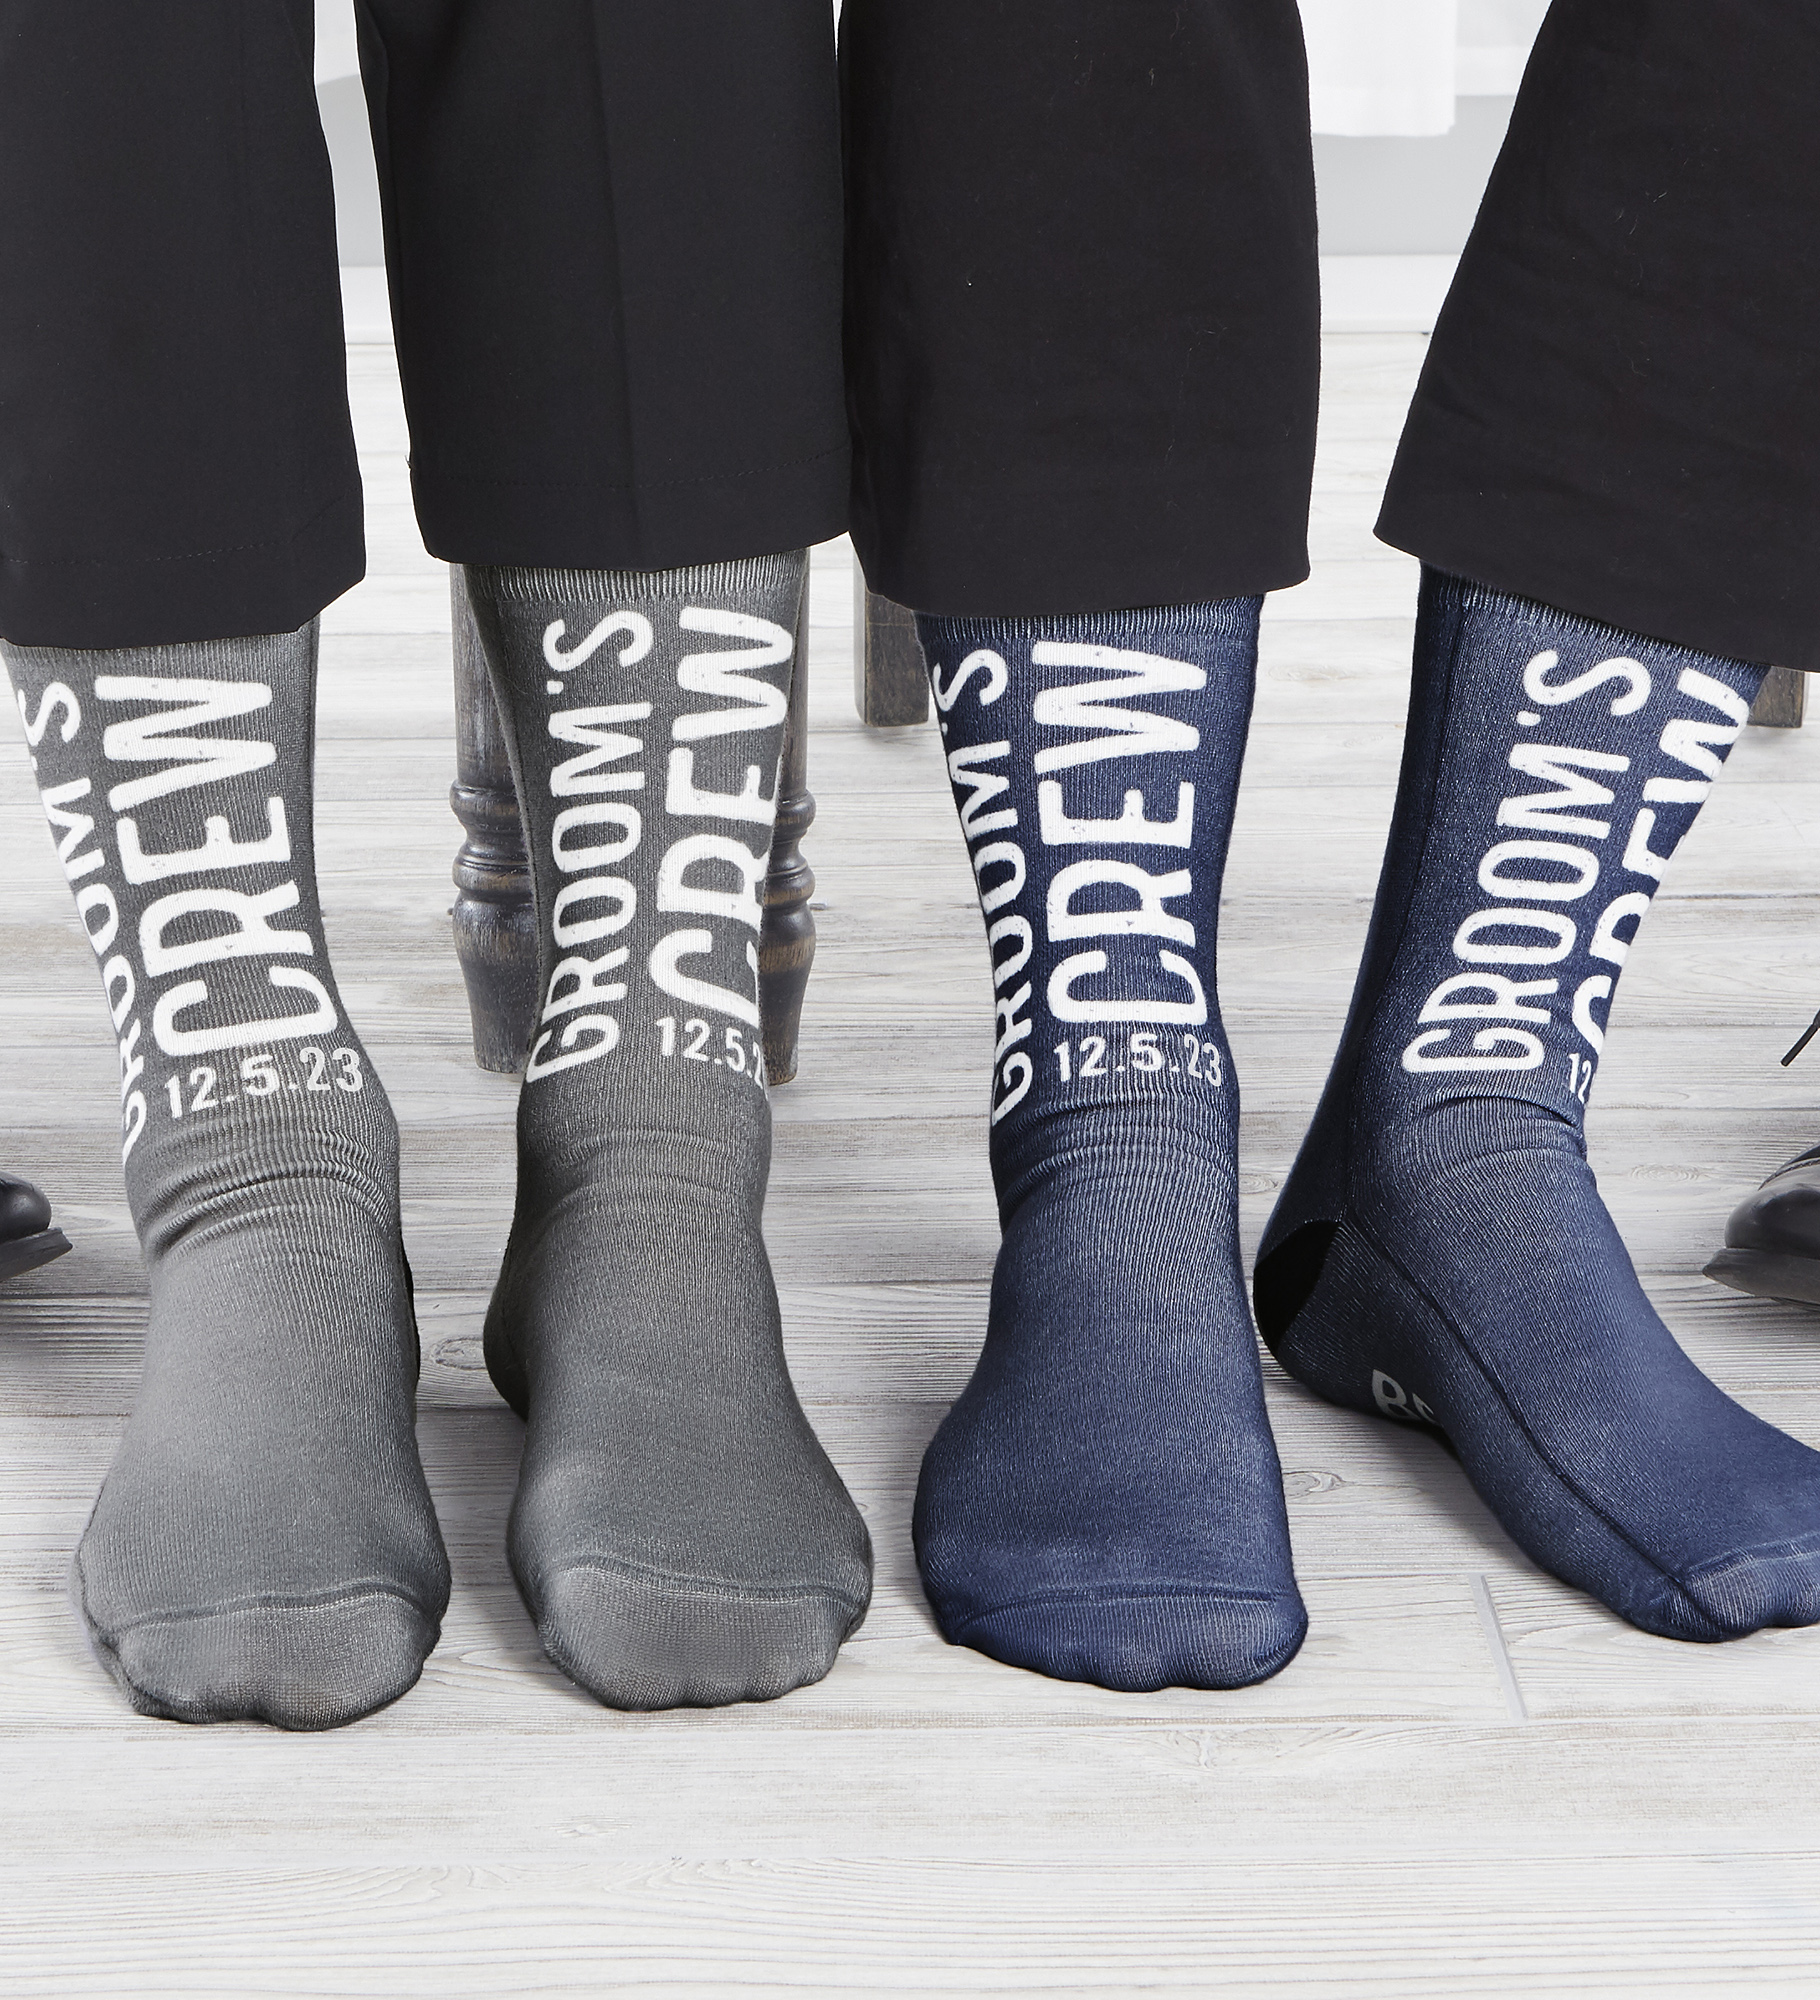 Groom's Crew Personalized Wedding Adult Socks